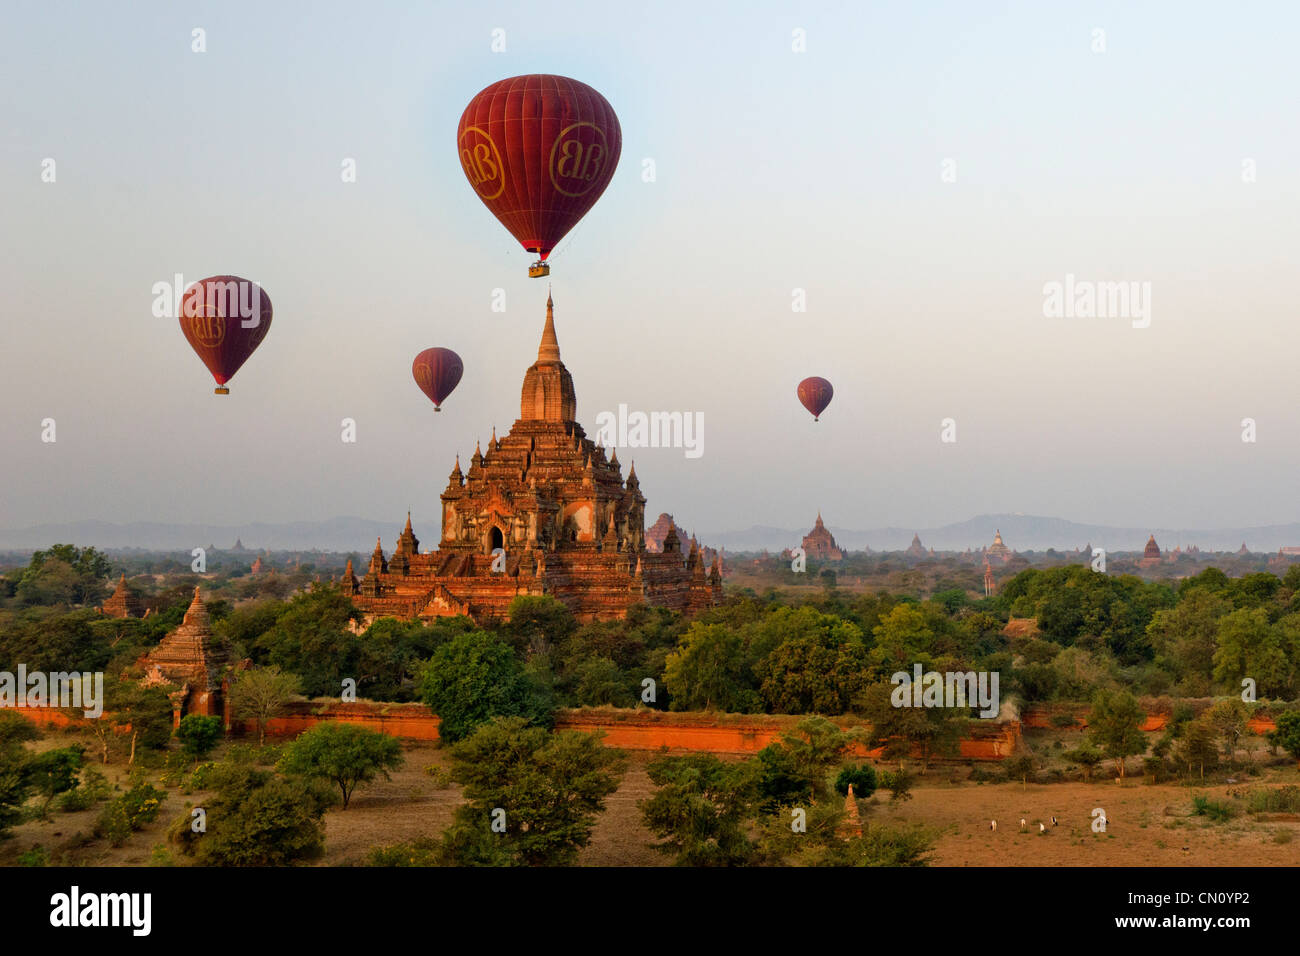 Hot-air Balloons over Sulamani Pahto, Bagan, Myanmar Stock Photo